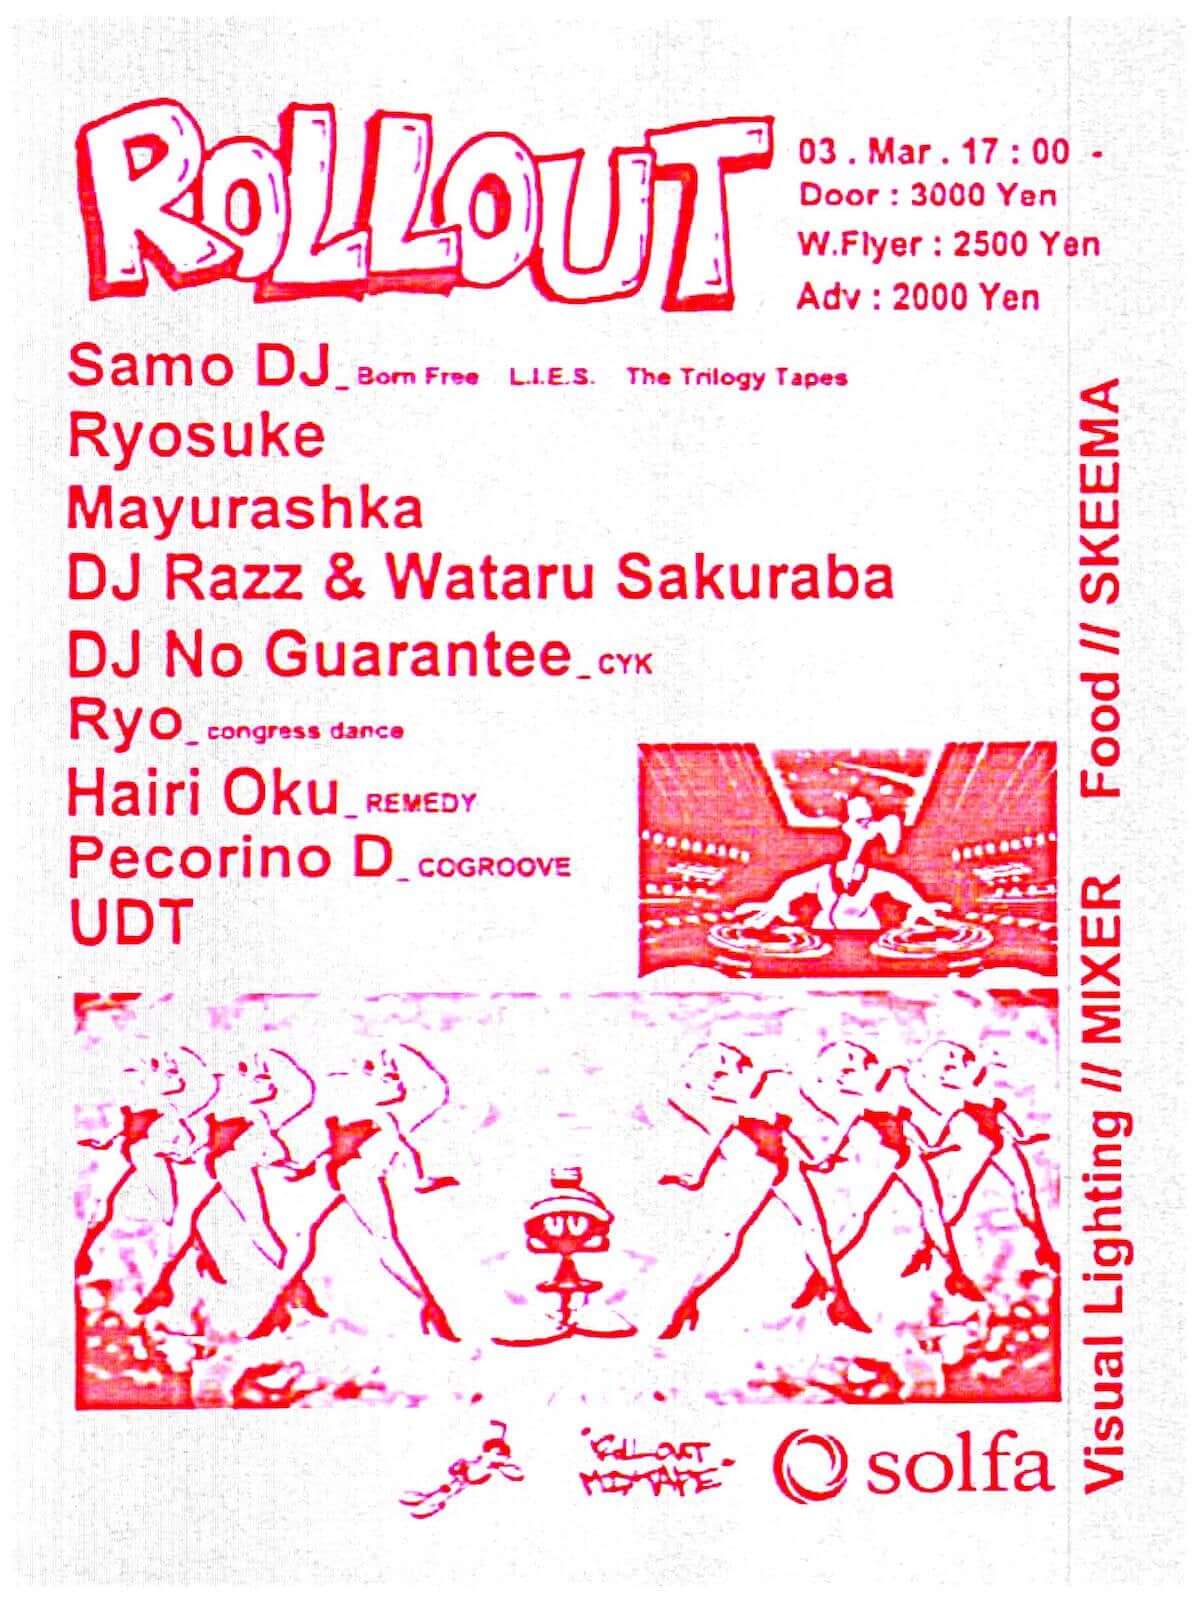 Samo DJが来日！Mayurashka、DJ No Guarantee（CYK）らも出演する「ROLLOUT」が中目黒solfaにて開催 music190222-rollout-feat-samo-dj-2-1200x1603